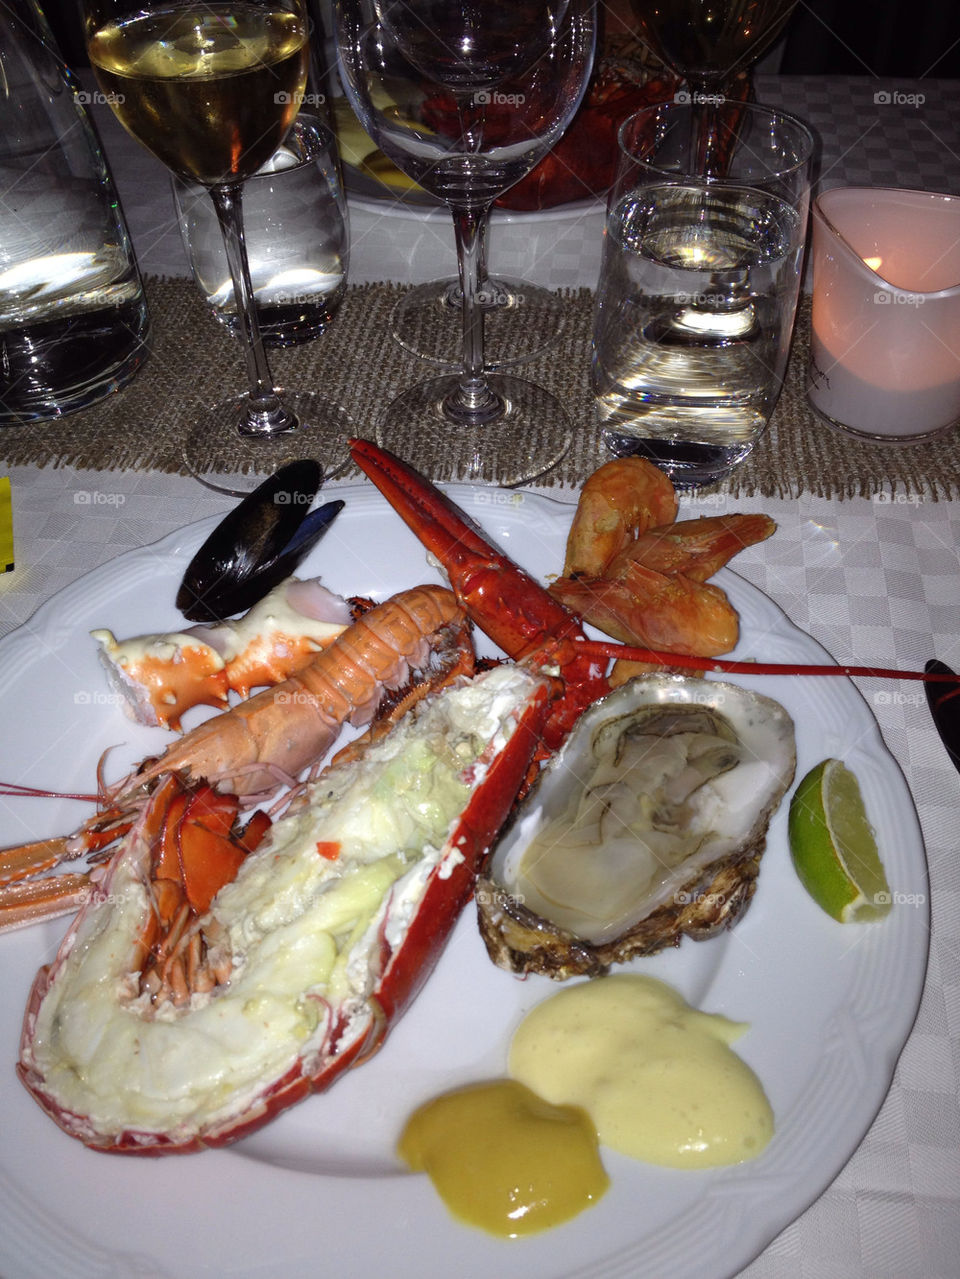 food plate dinner celebration by sandborgskan